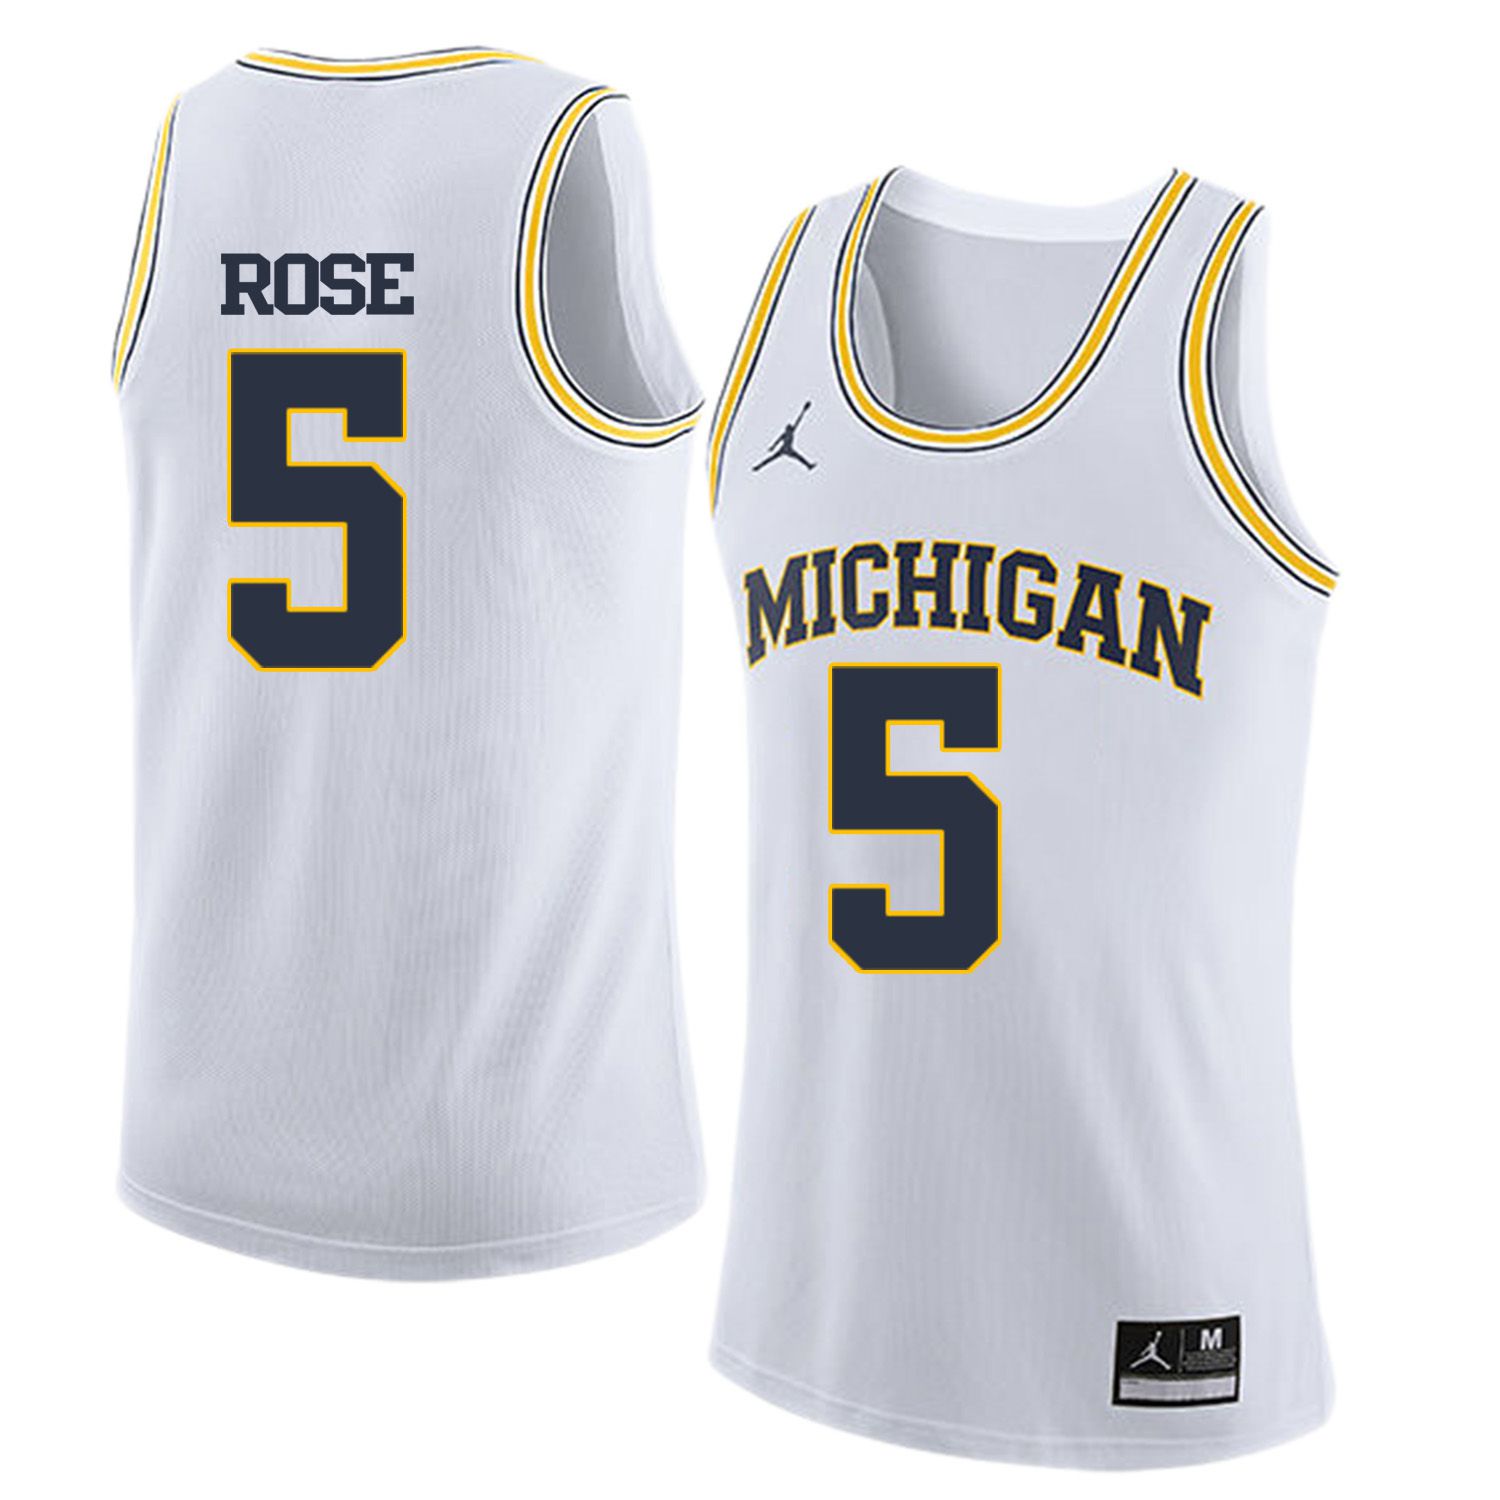 Men Jordan University of Michigan Basketball White 5 Rose Customized NCAA Jerseys